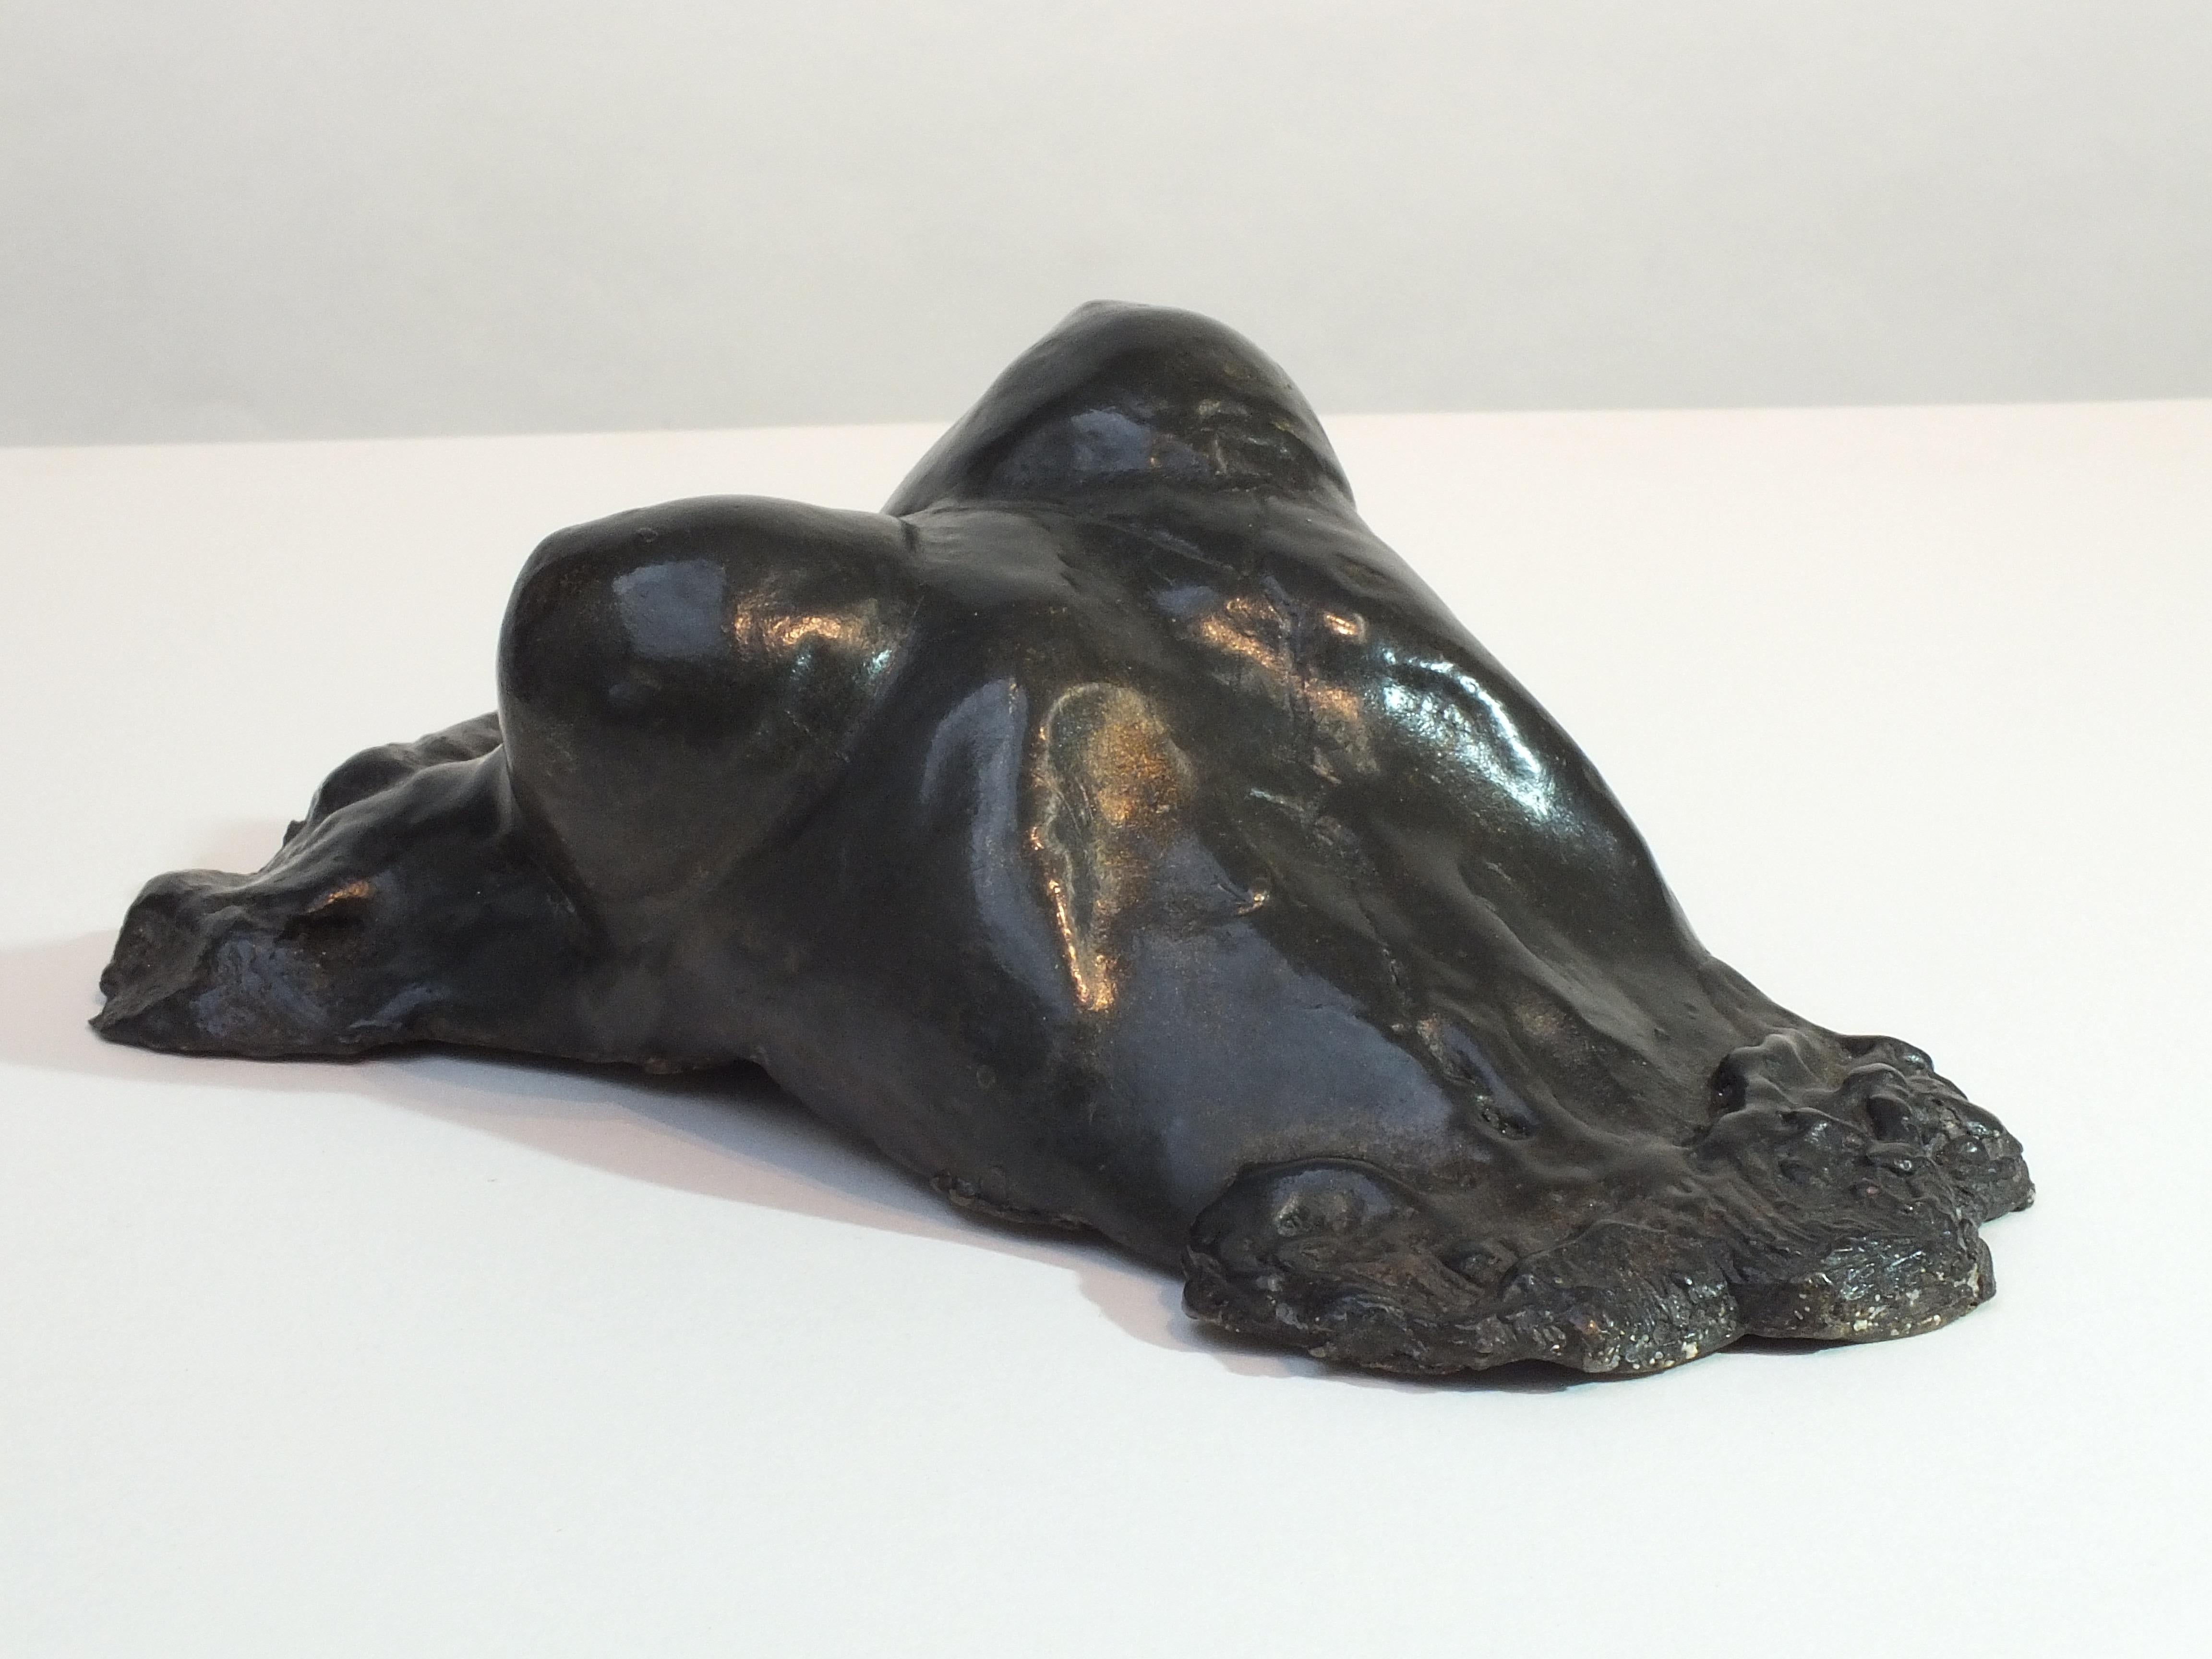 Tim Rawlins Nude Sculpture - "Emergent Form", Contemporary Cast Bronze Sculpture